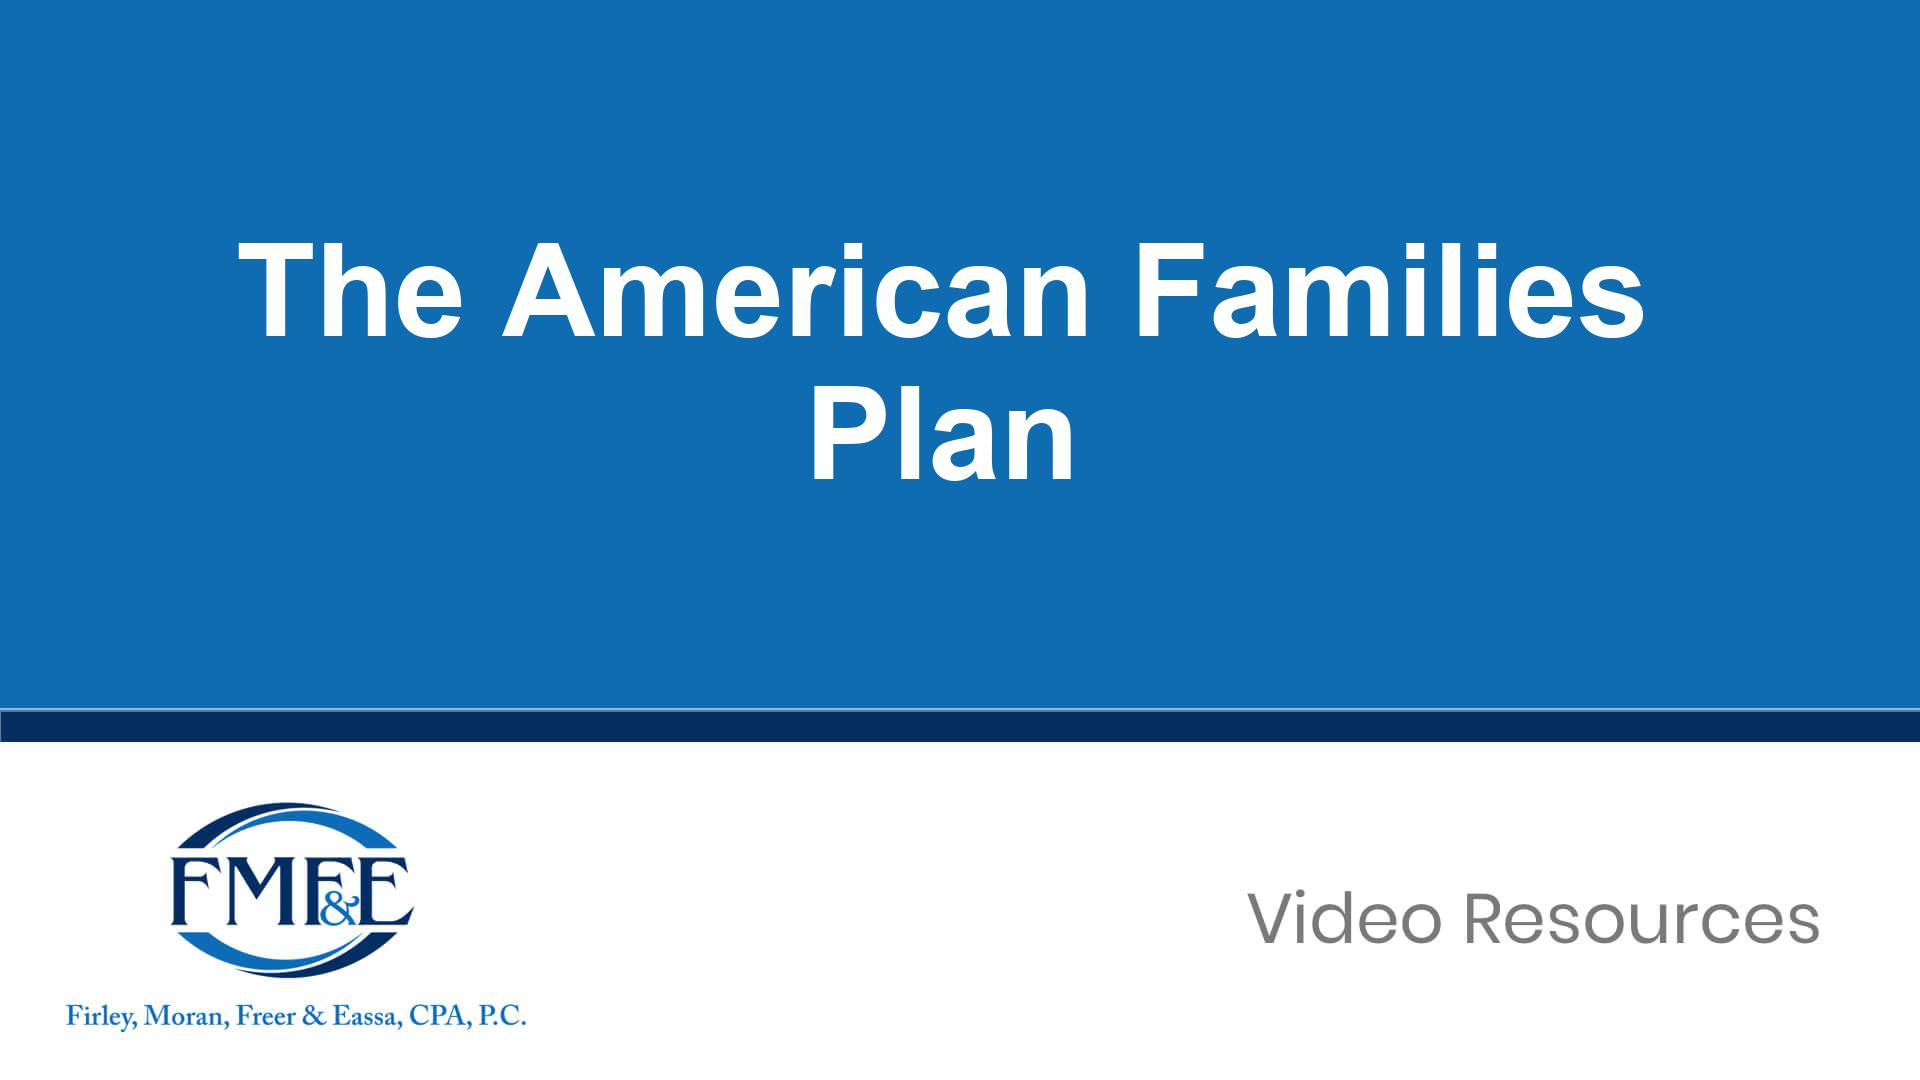 The American Families Plan FMF&E